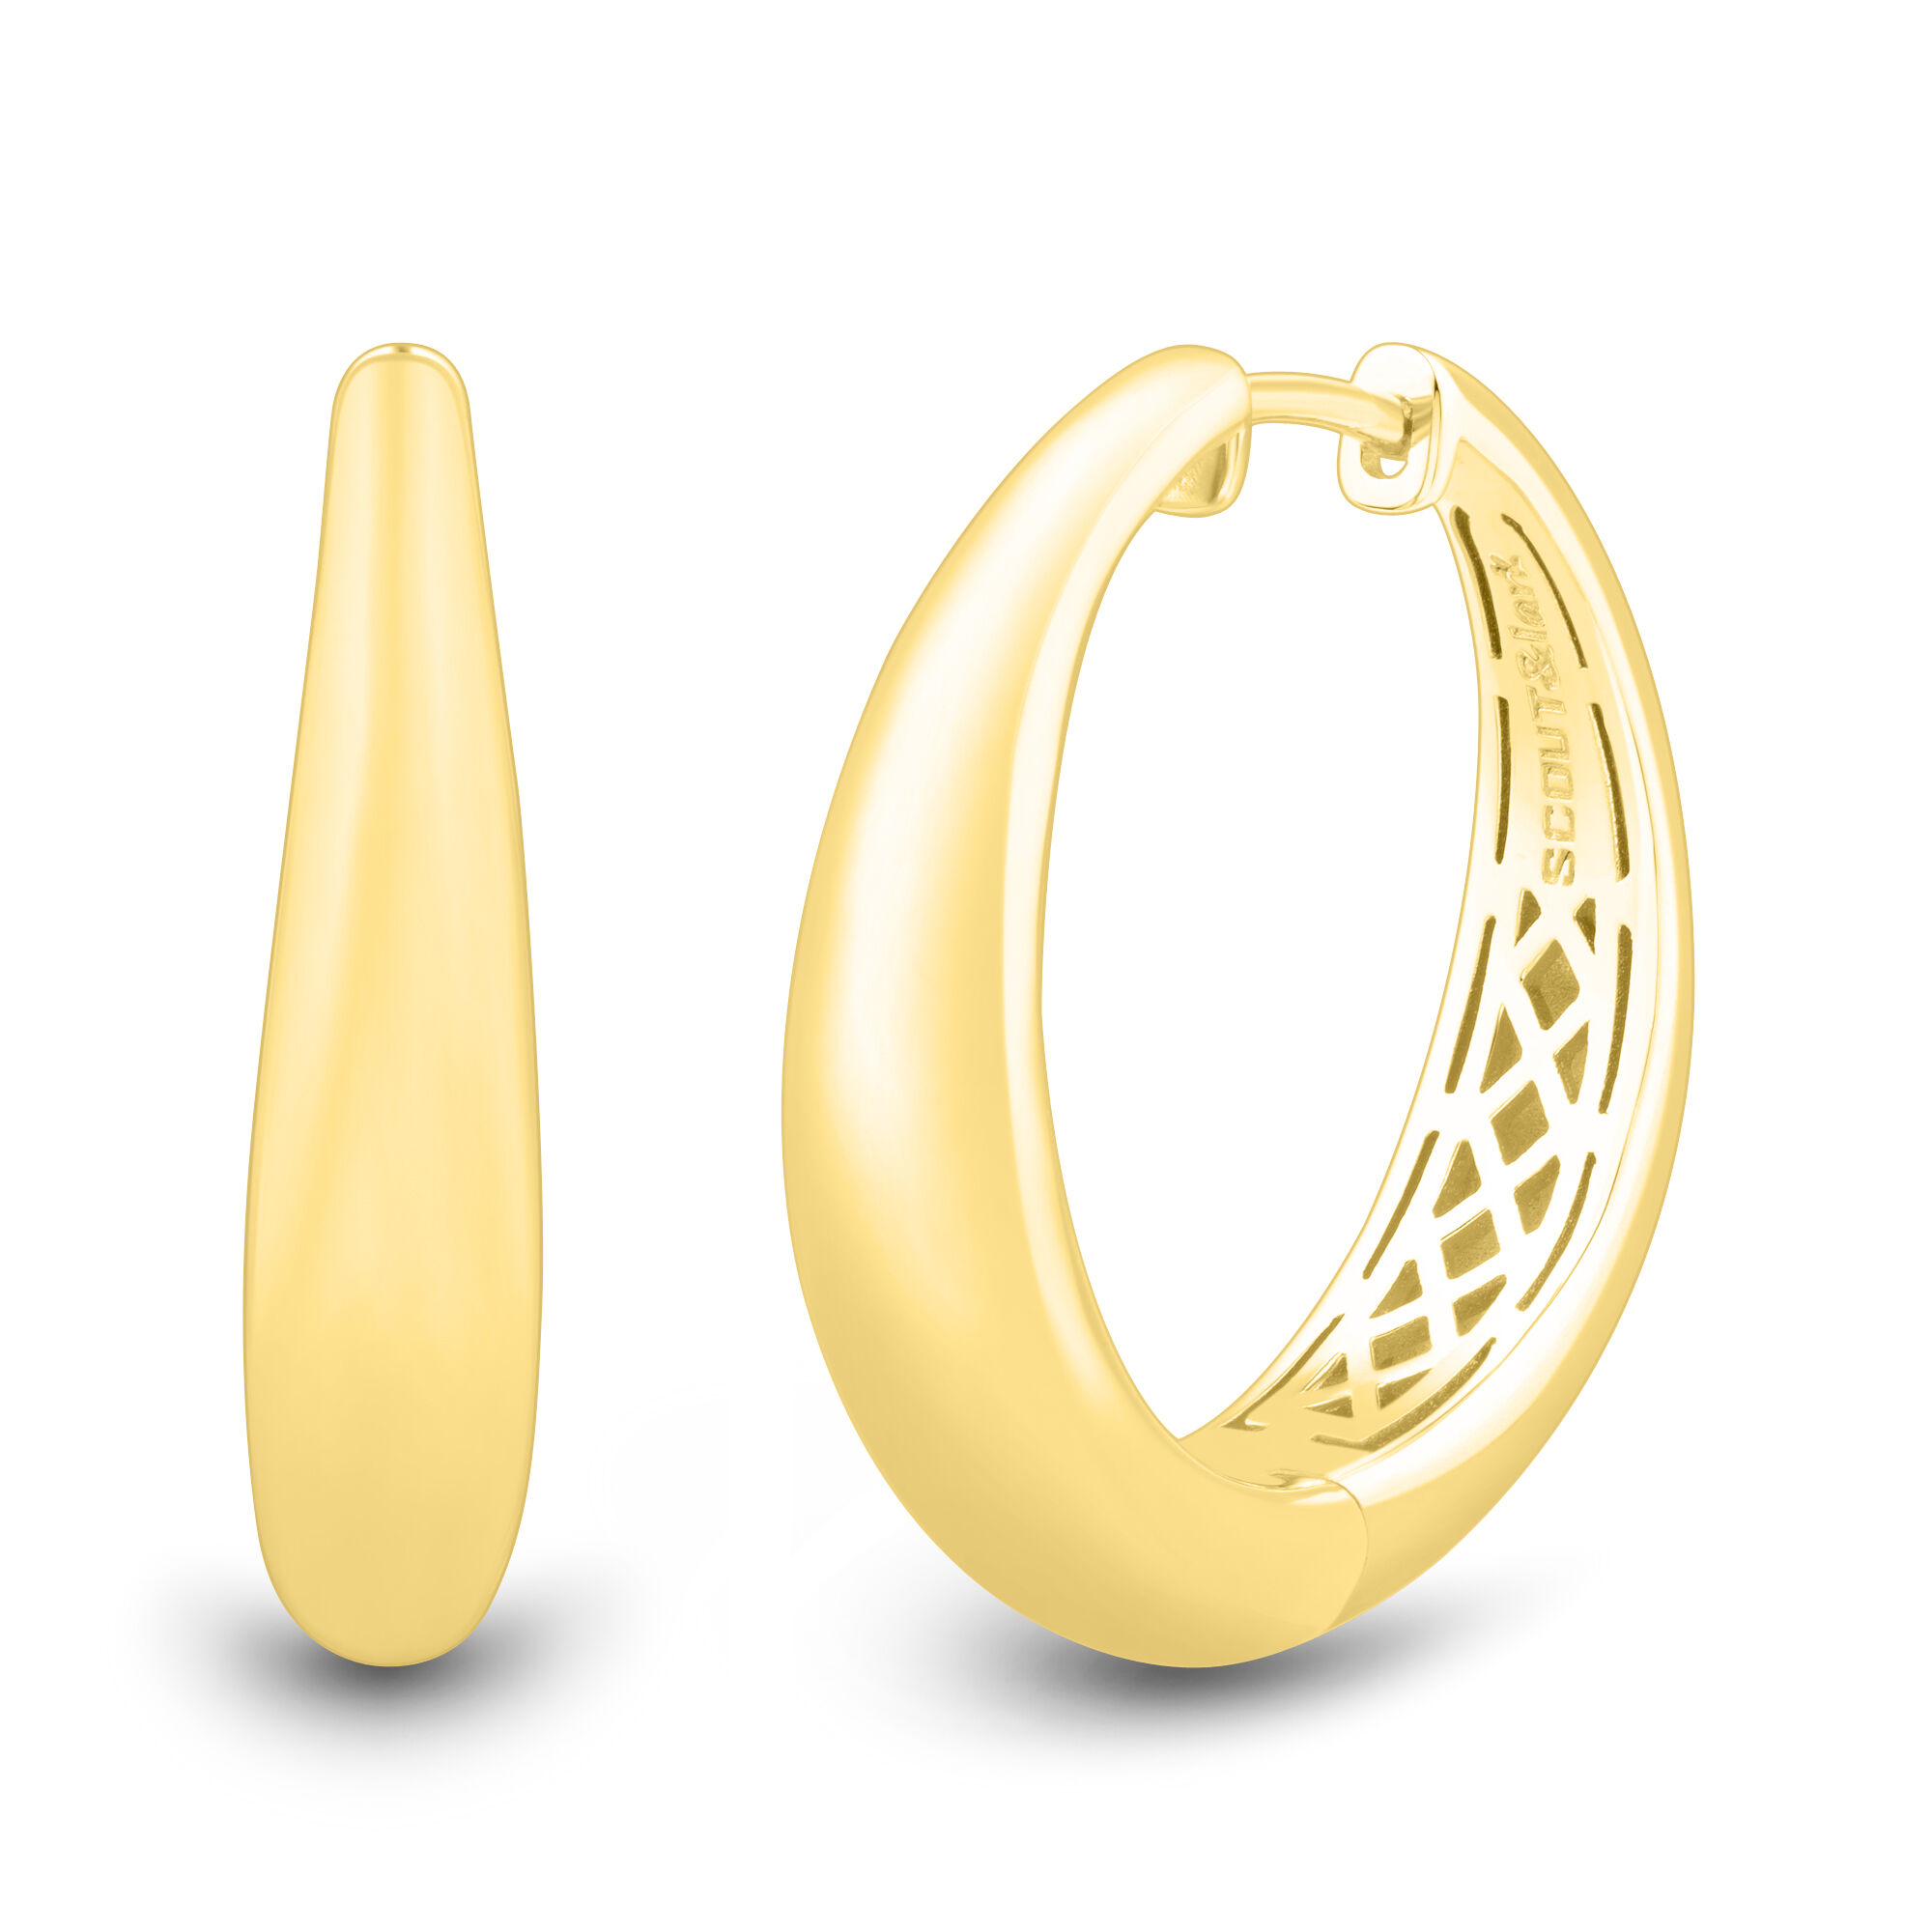 925 Sterling Silver - Vintage Shiny Gold Plated Round Hoop Earrings -  EG9243 | eBay